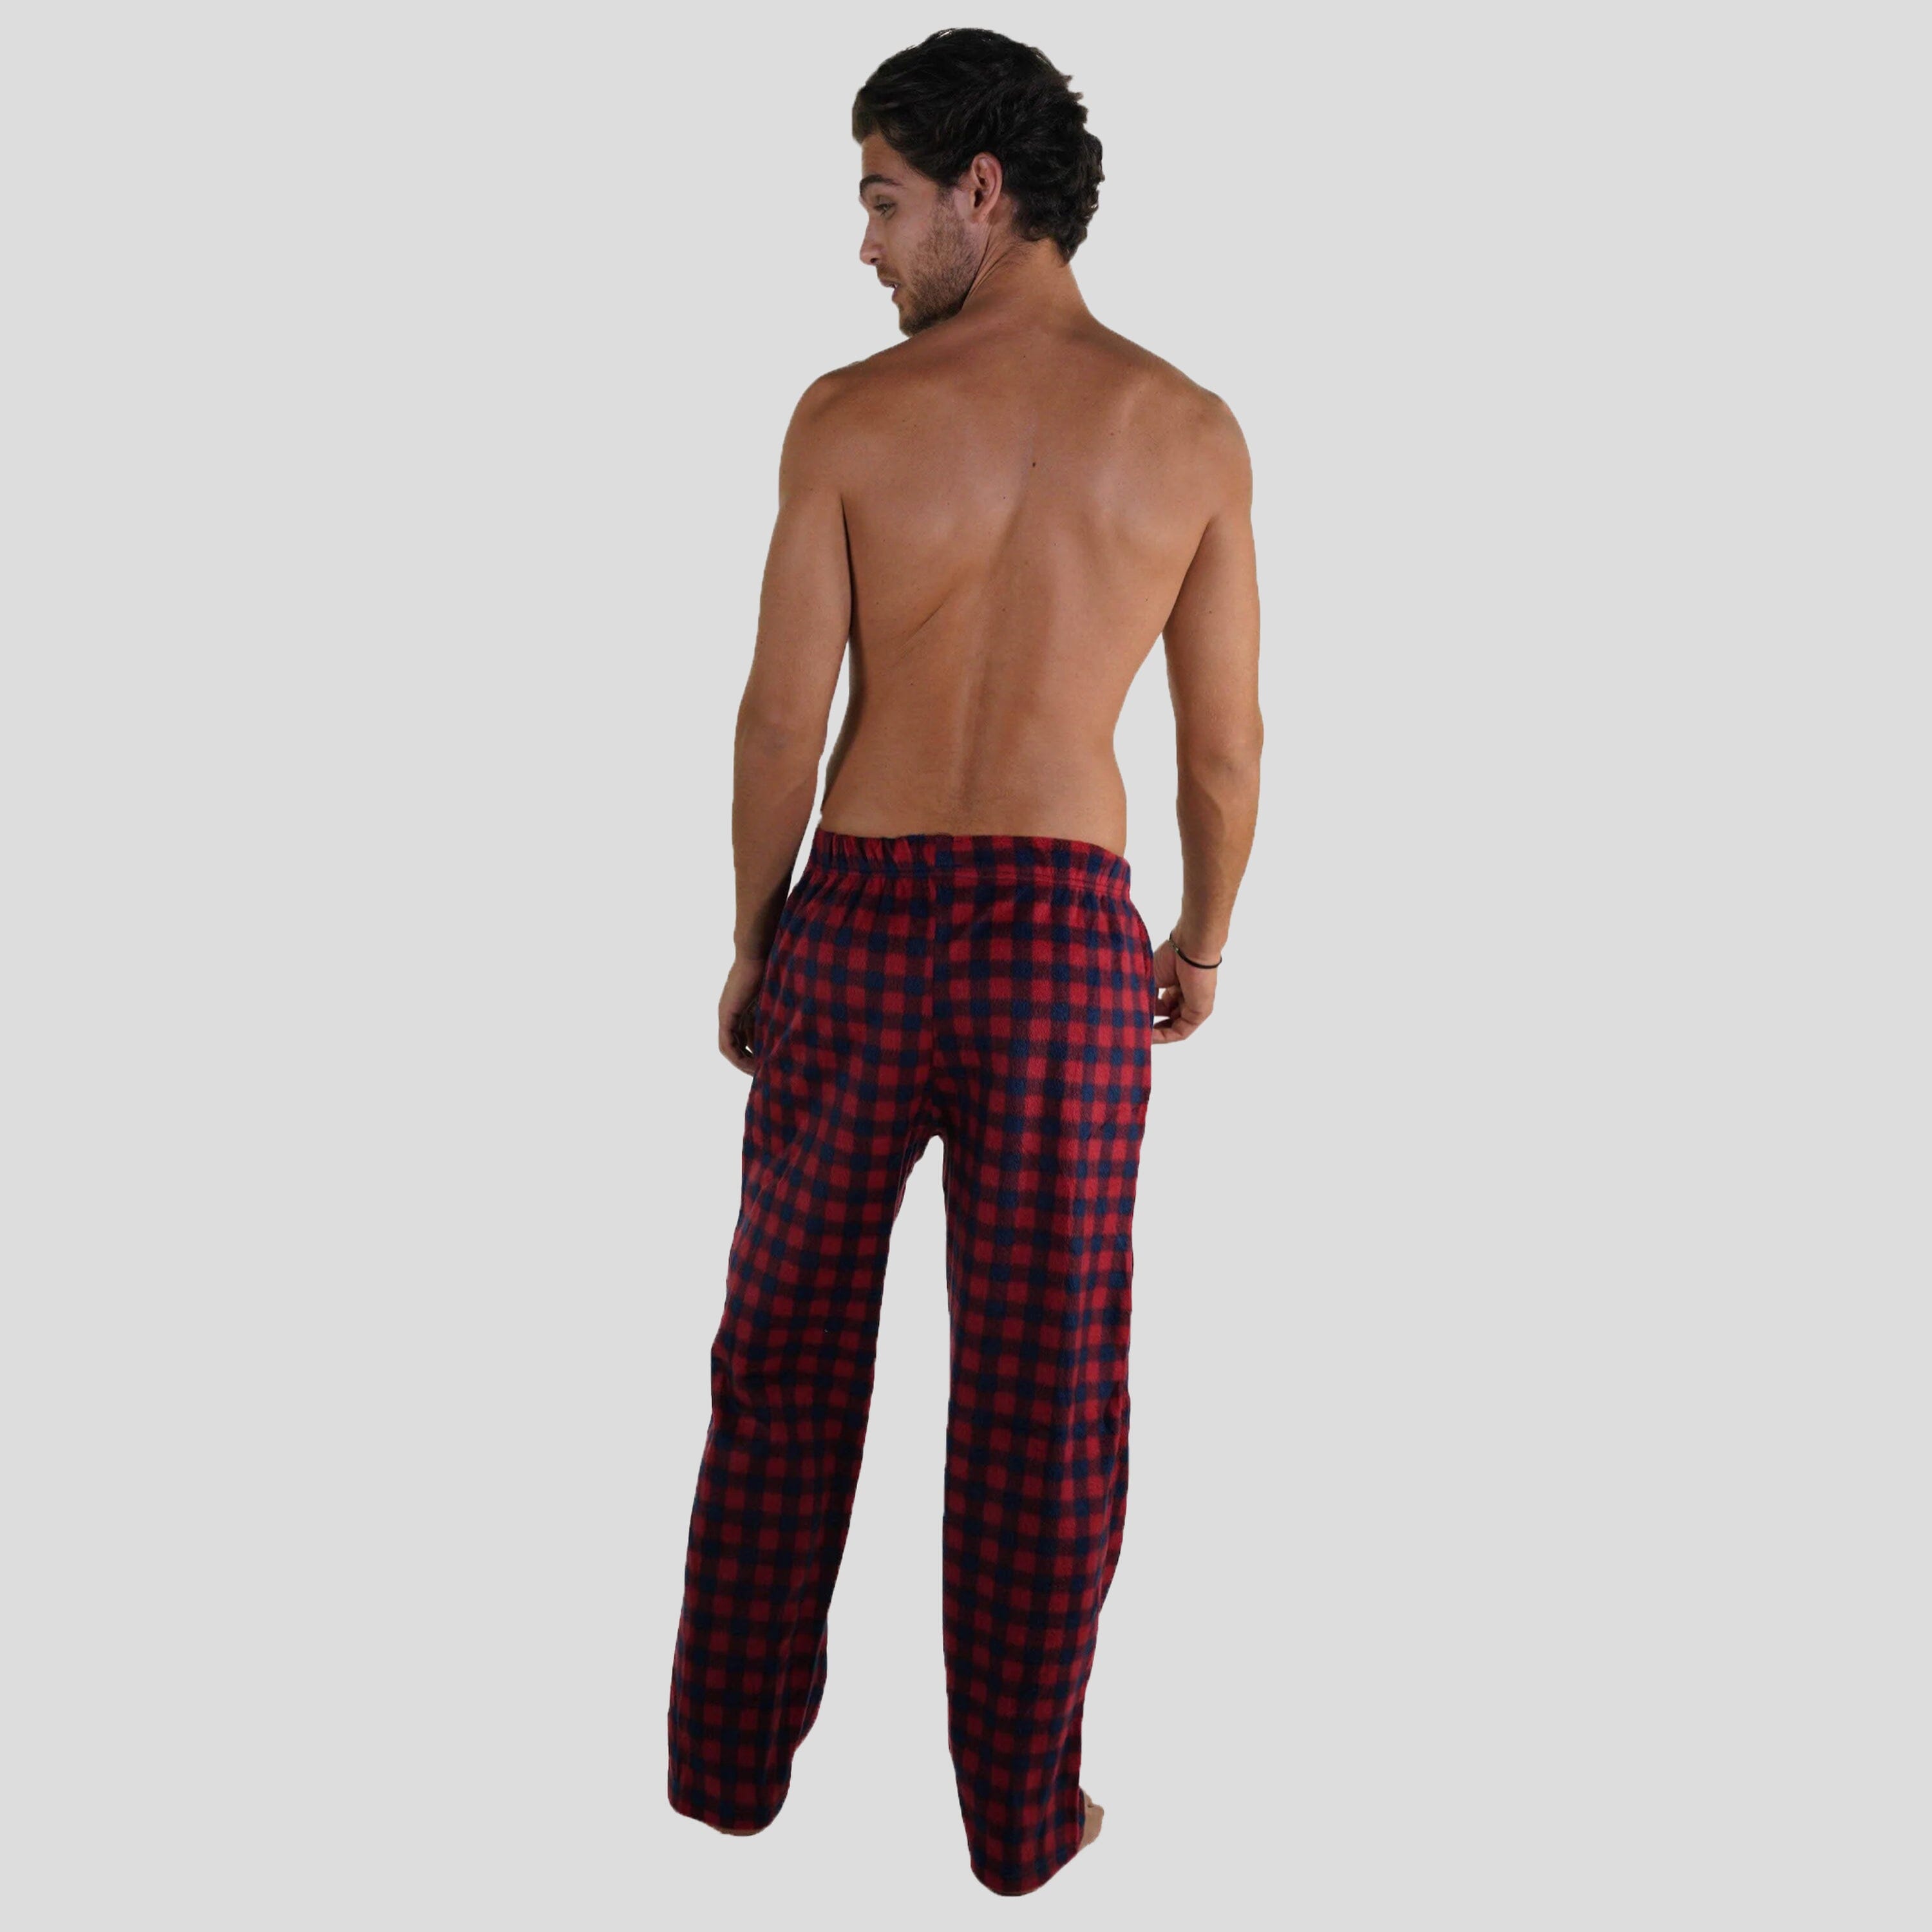 Men's Minky Fleece Sleep Pants - Red Plaid